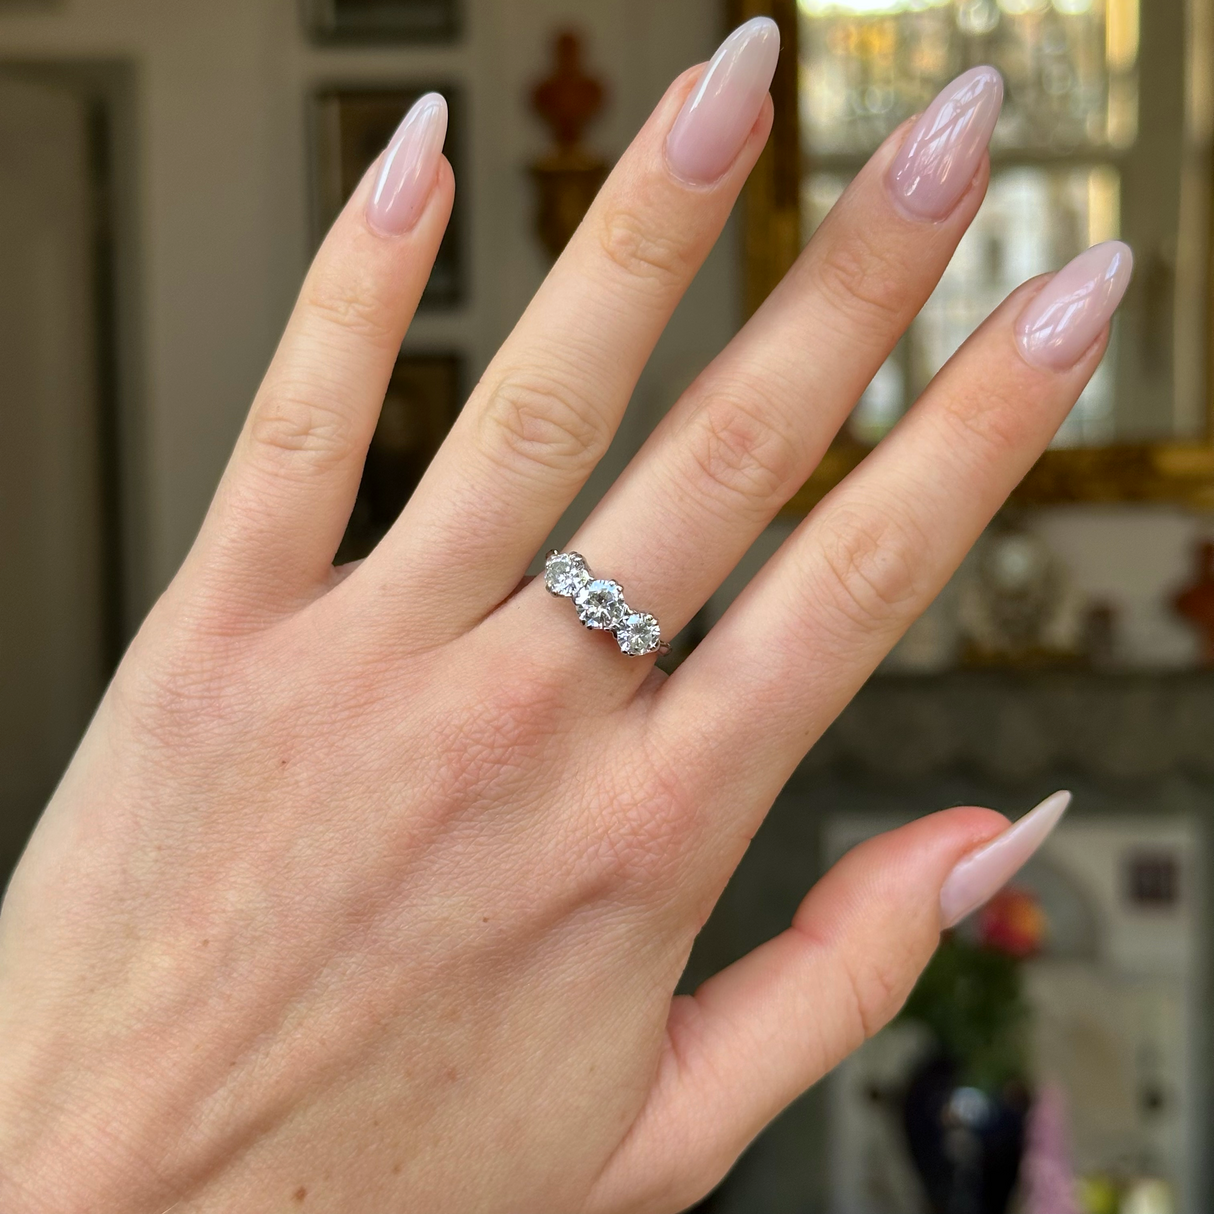 Vintage three stone diamond engagement ring worn on hand. 